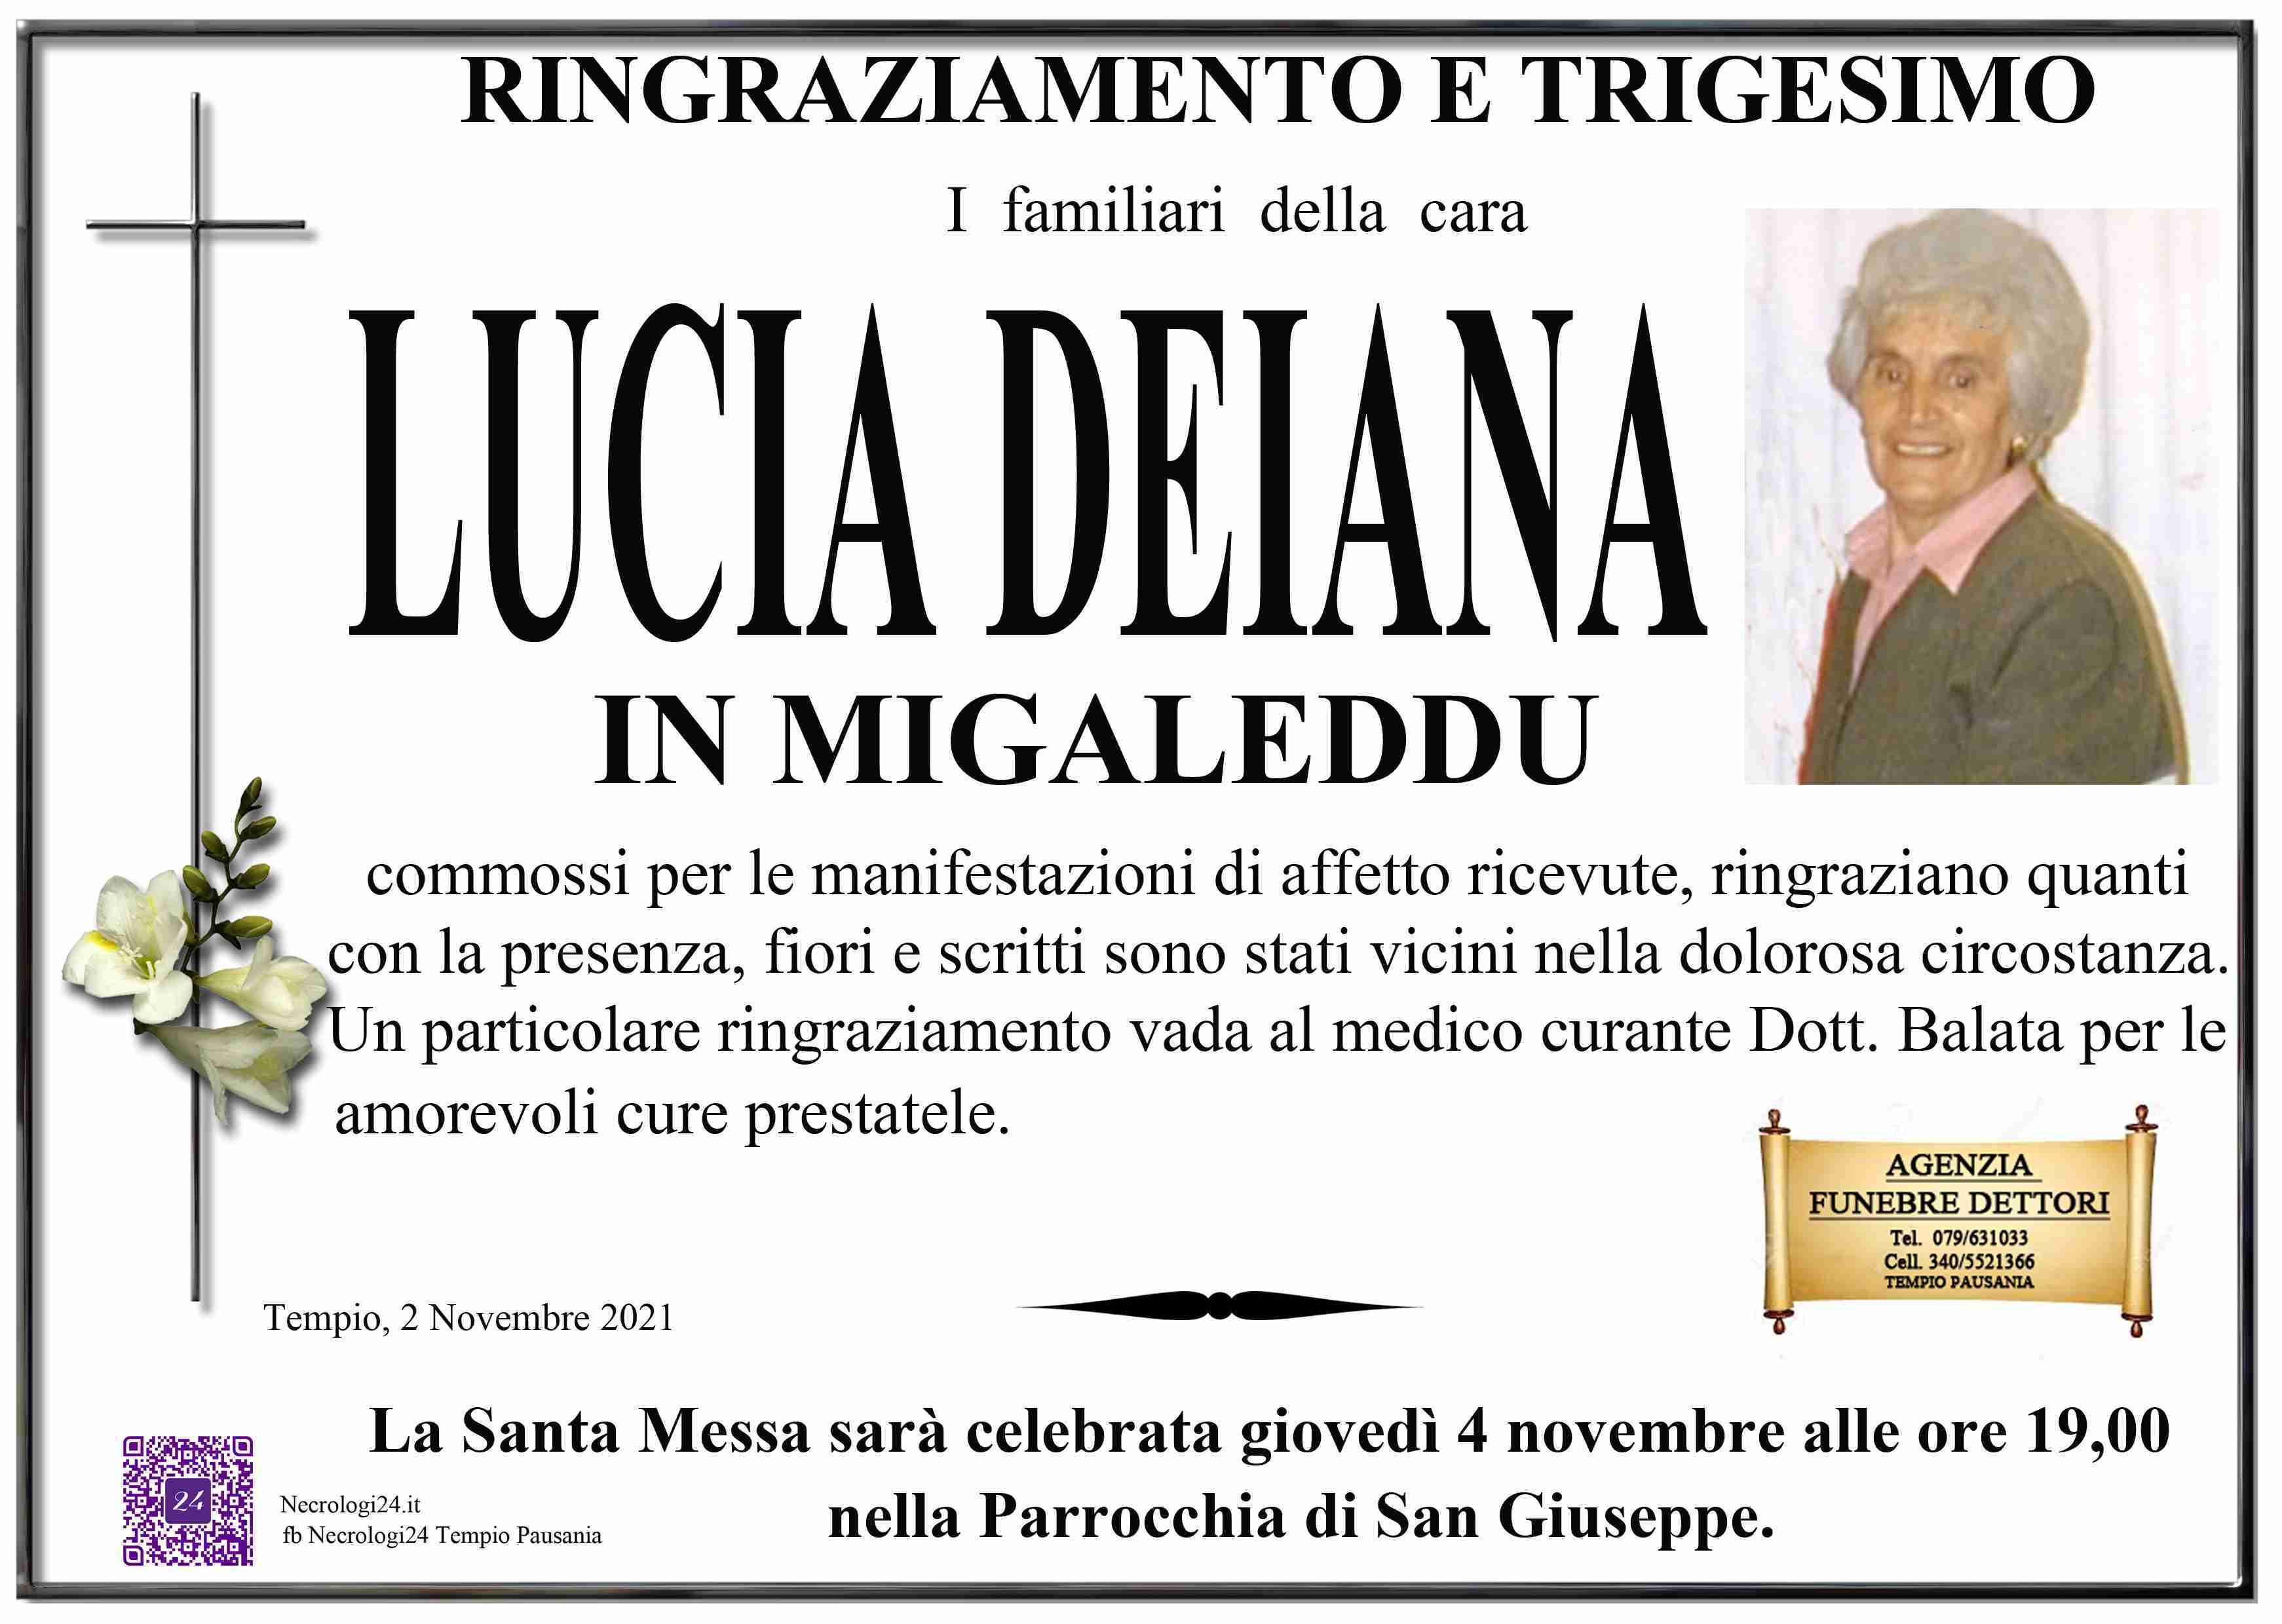 Lucia Deiana